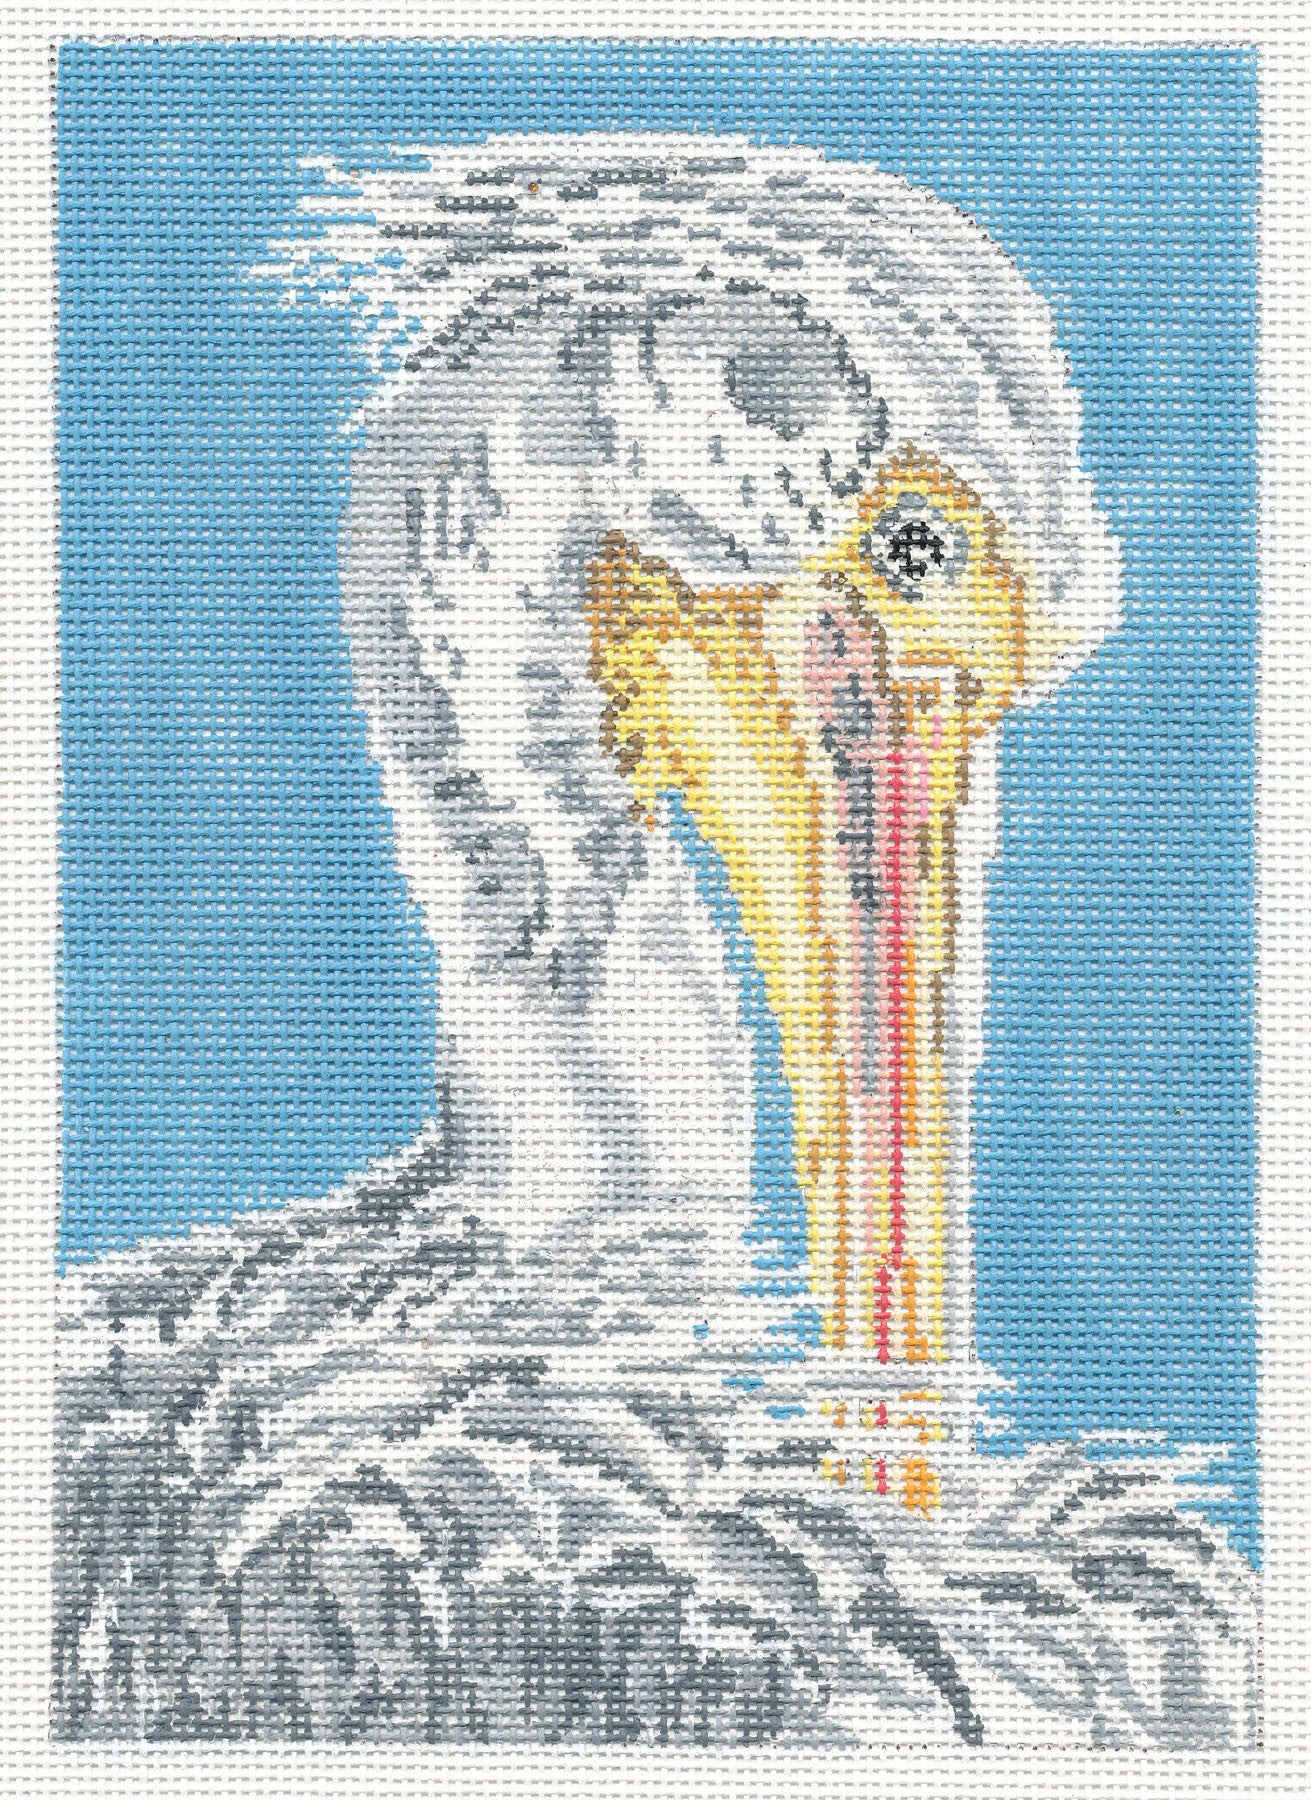 Bird Canvas ~ Elegant White Pelican Bird handpainted 13 mesh Needlepoint Canvas by Needle Crossings